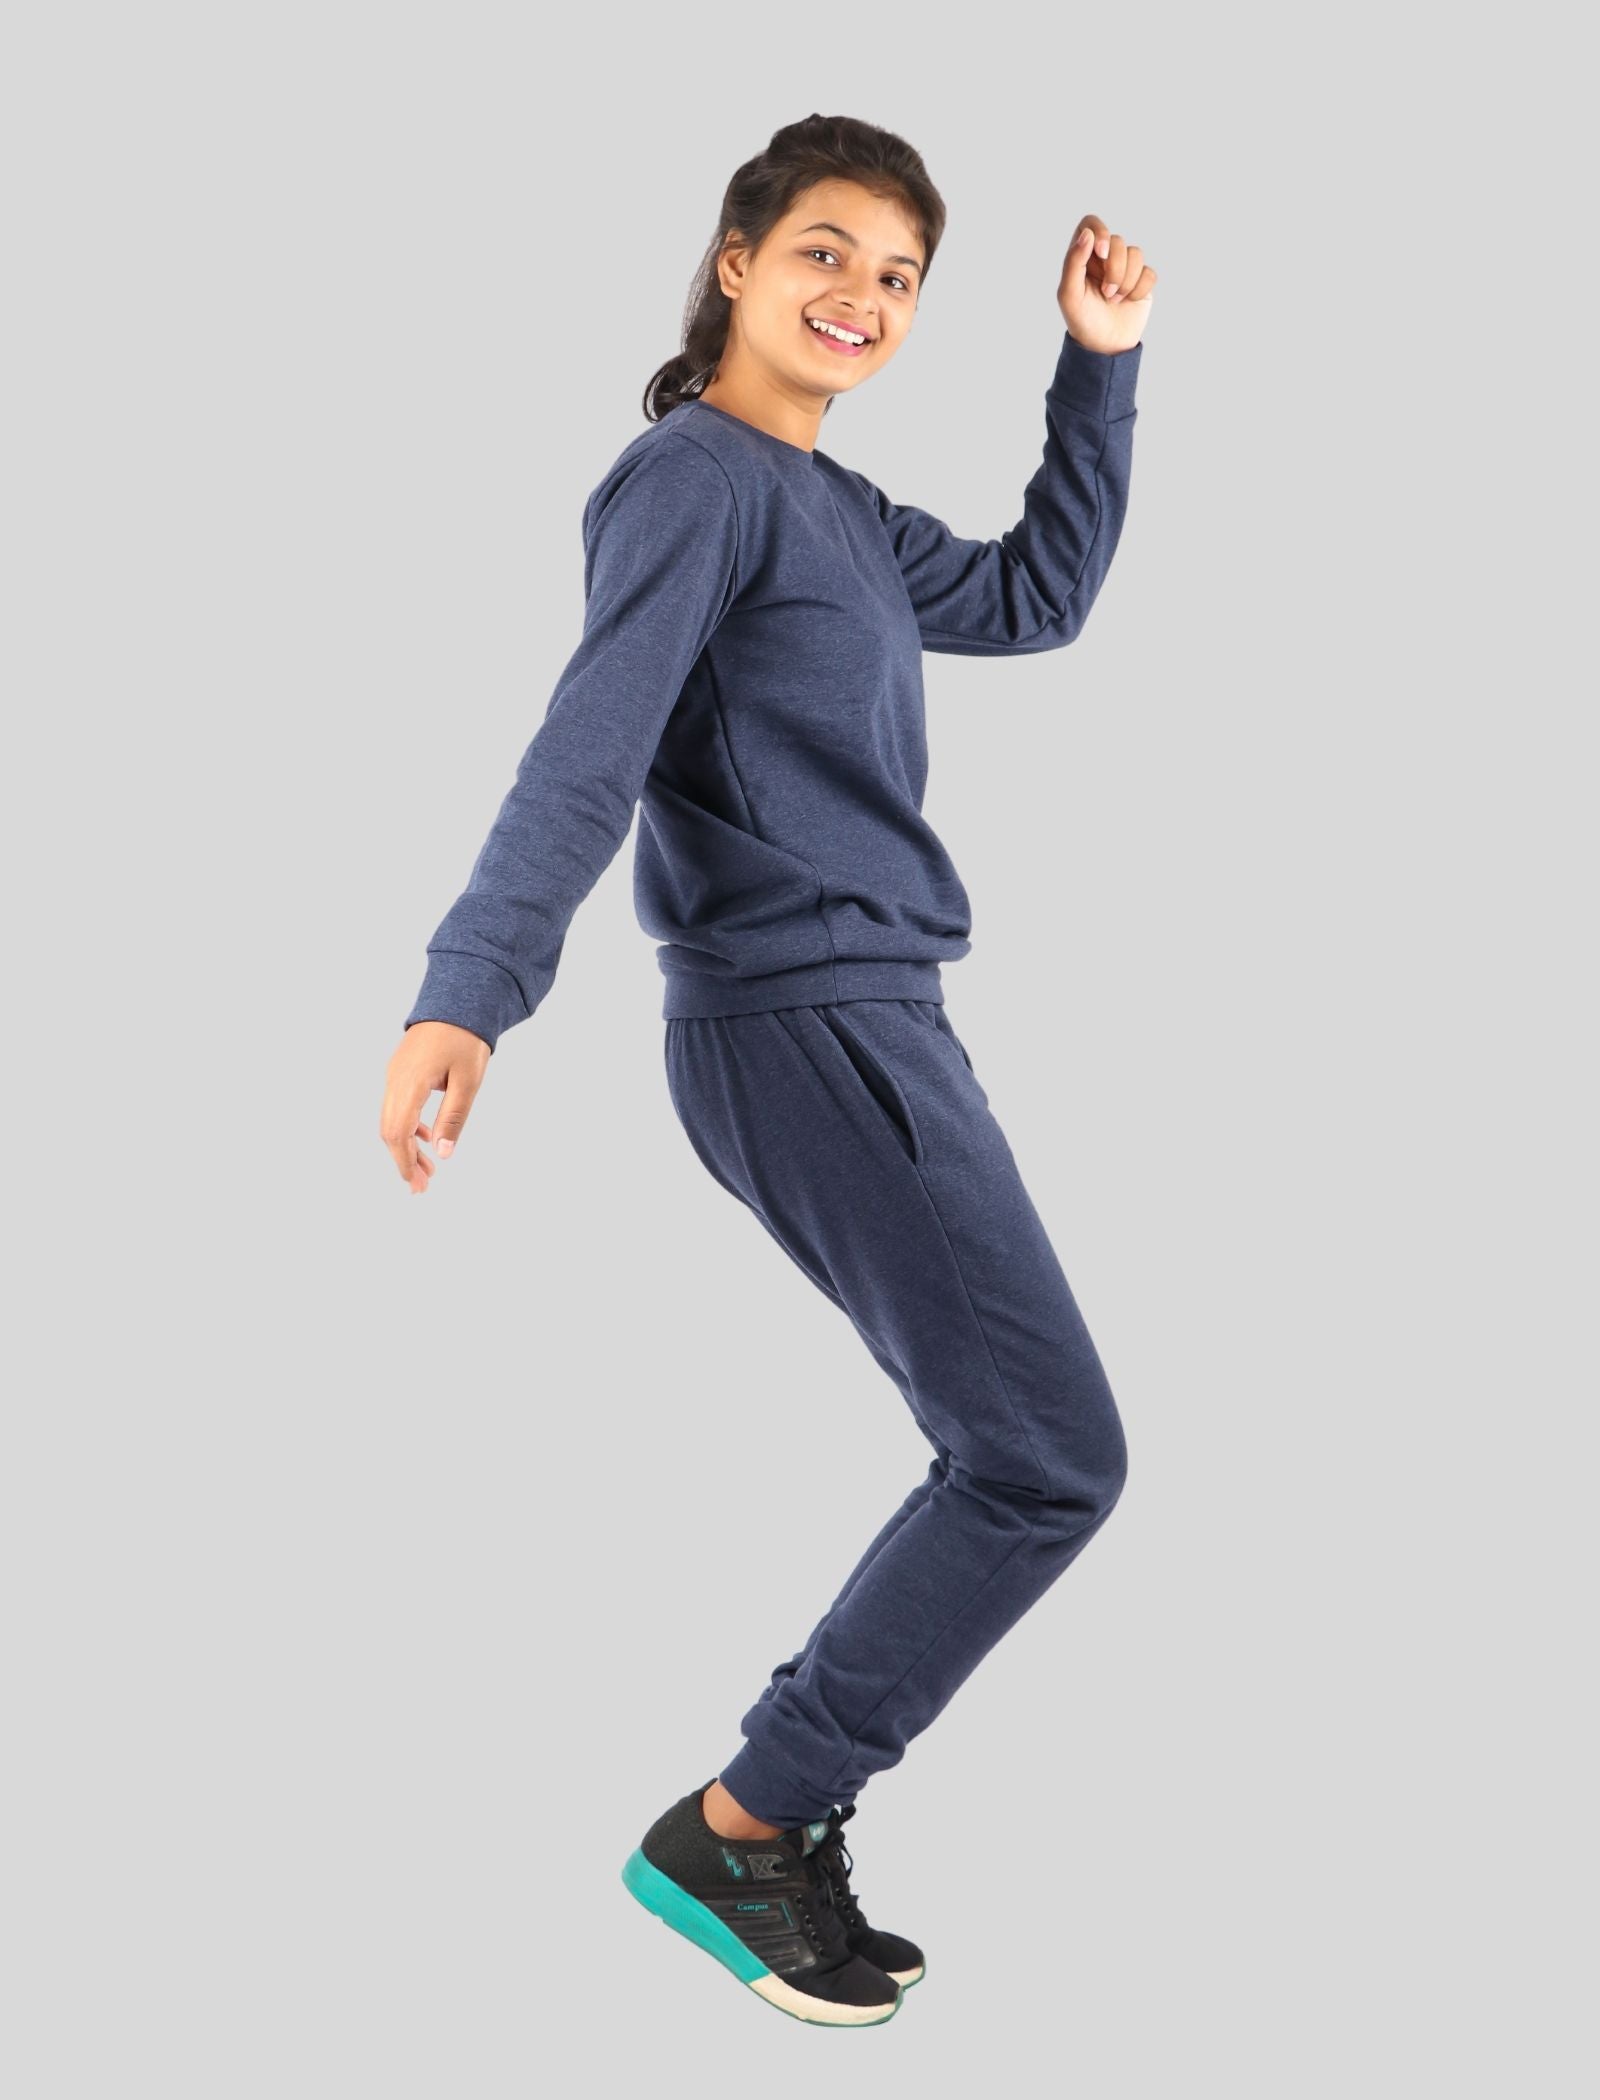 Girls Kids Fleece Winter Joggers Track Suit Set (Navy Blue